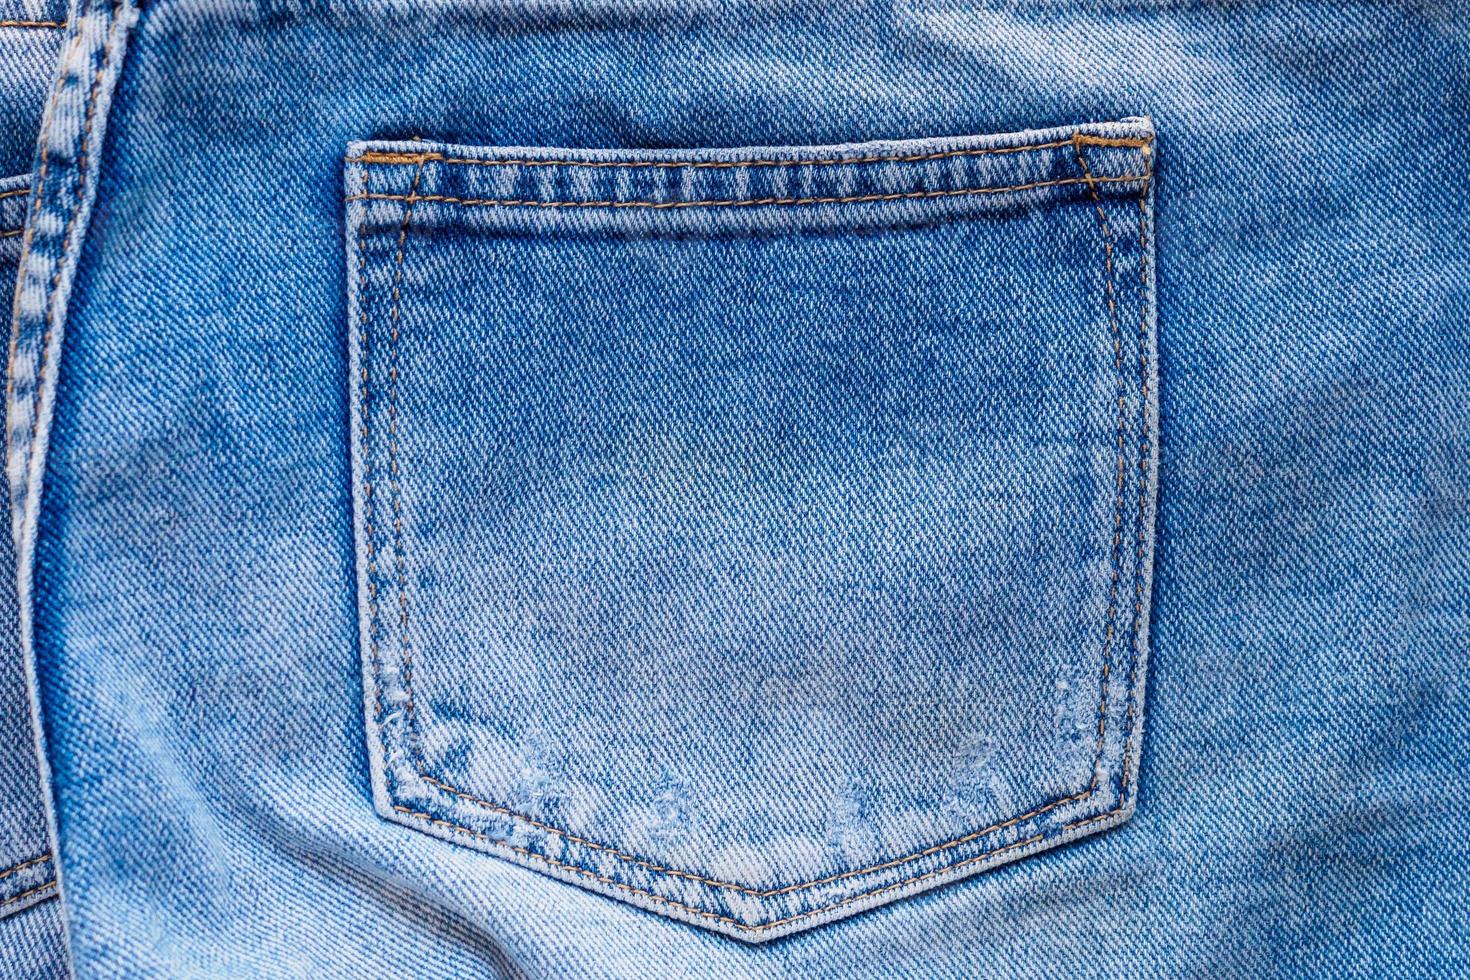 vaqueros de mezclilla azul bolsillo trasero de cerca foto